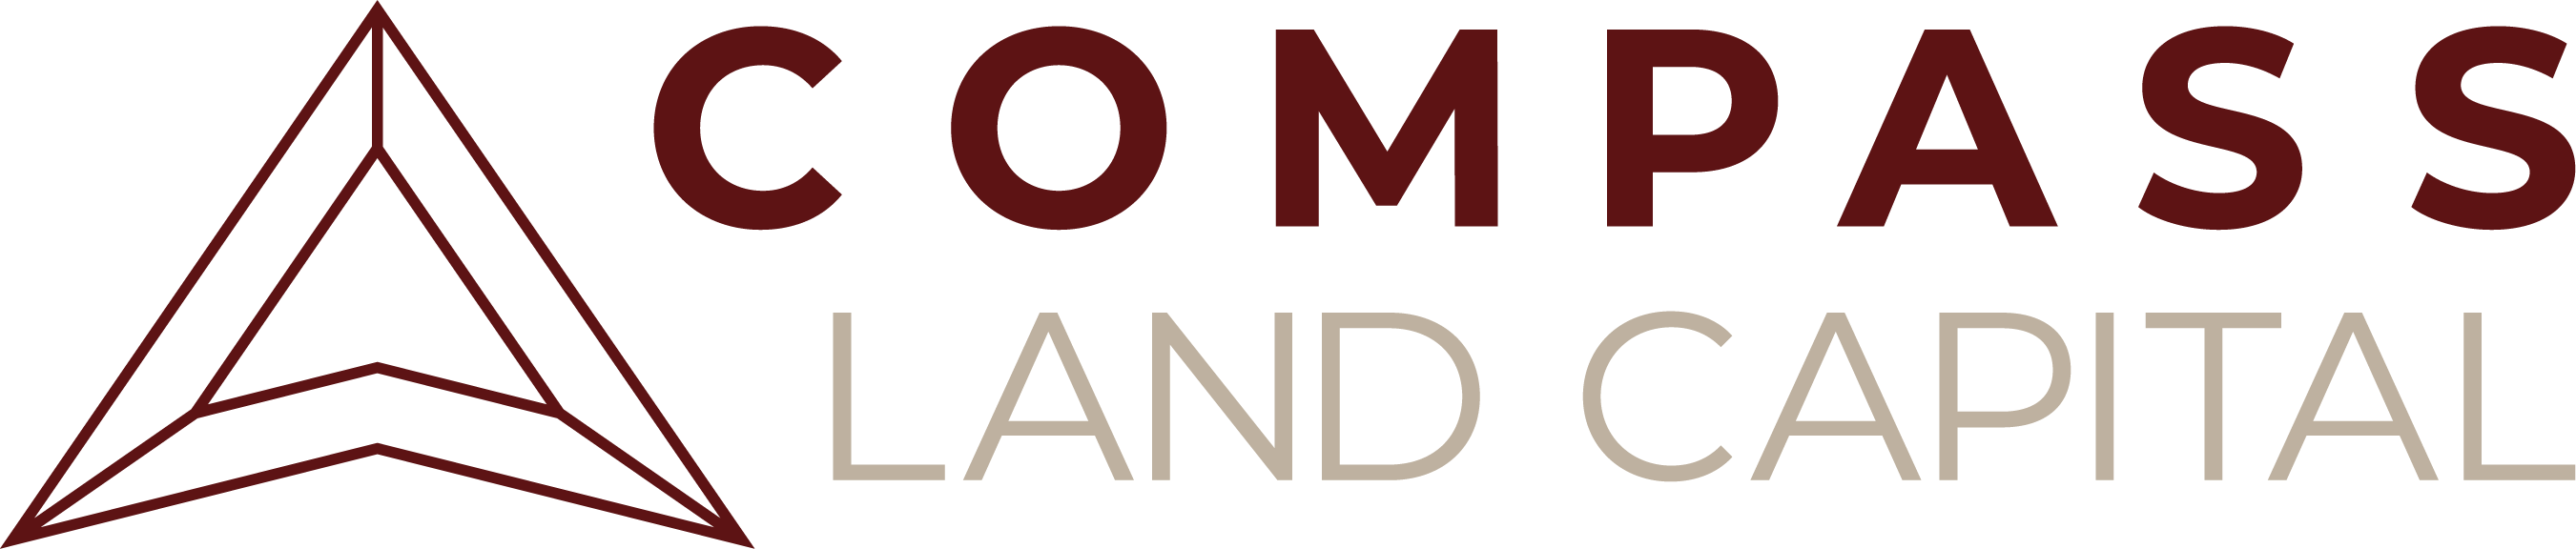 Compass Land Capital logo